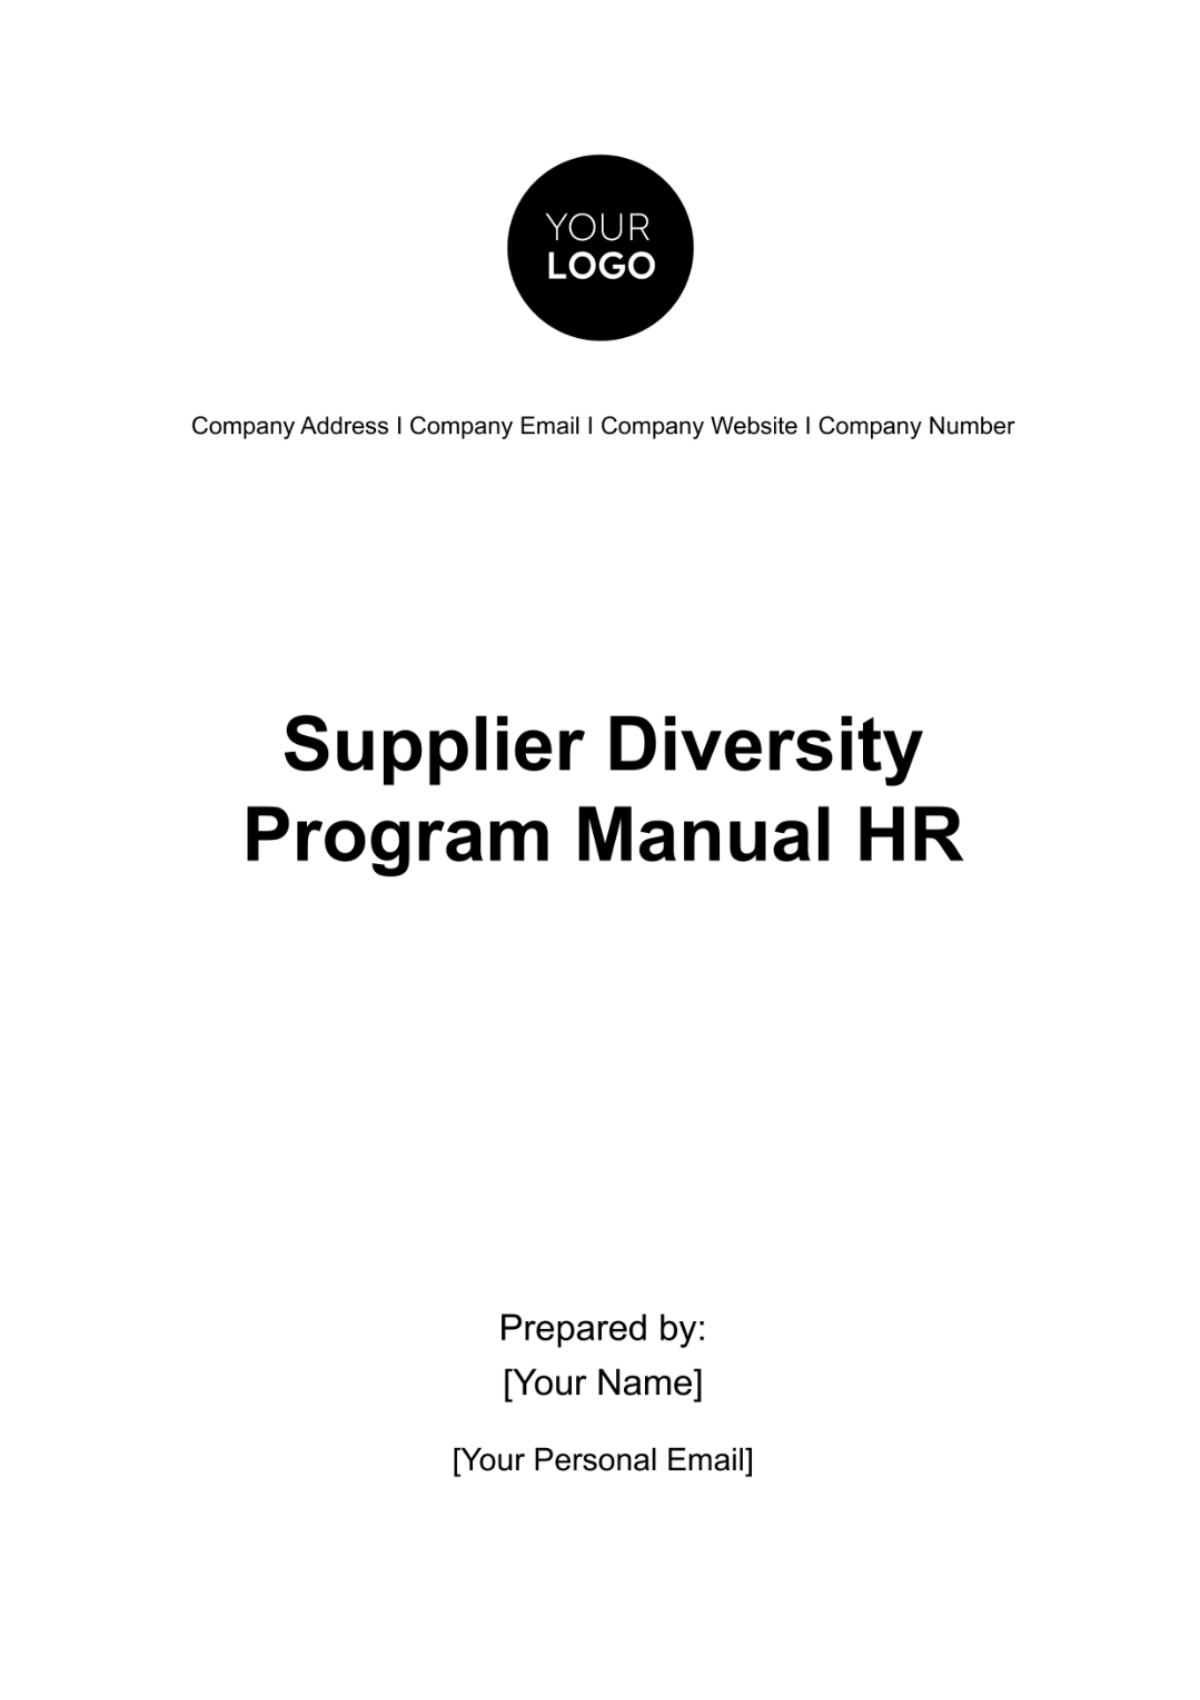 Free Supplier Diversity Program Manual HR Template